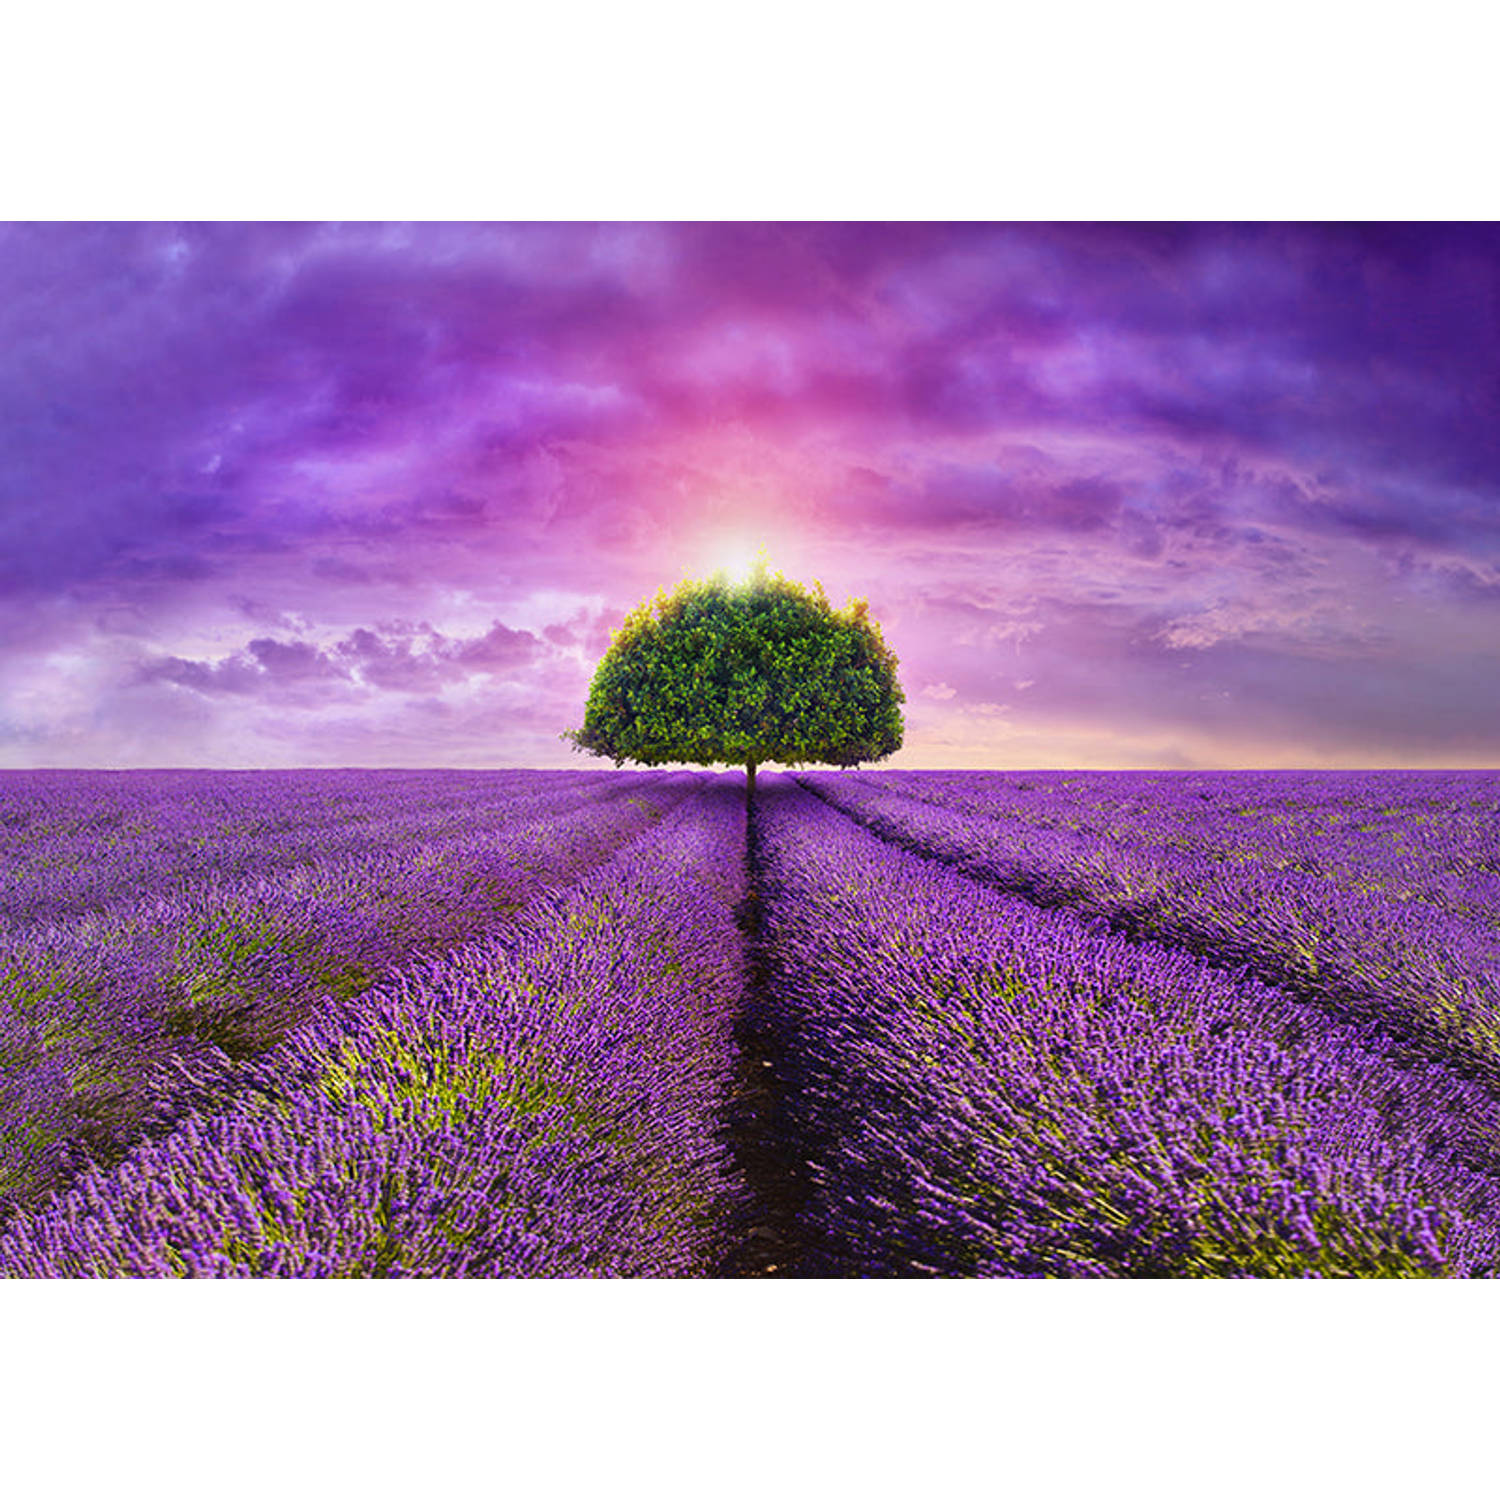 Inductiebeschermer - Lavendel veld - 85x55 cm